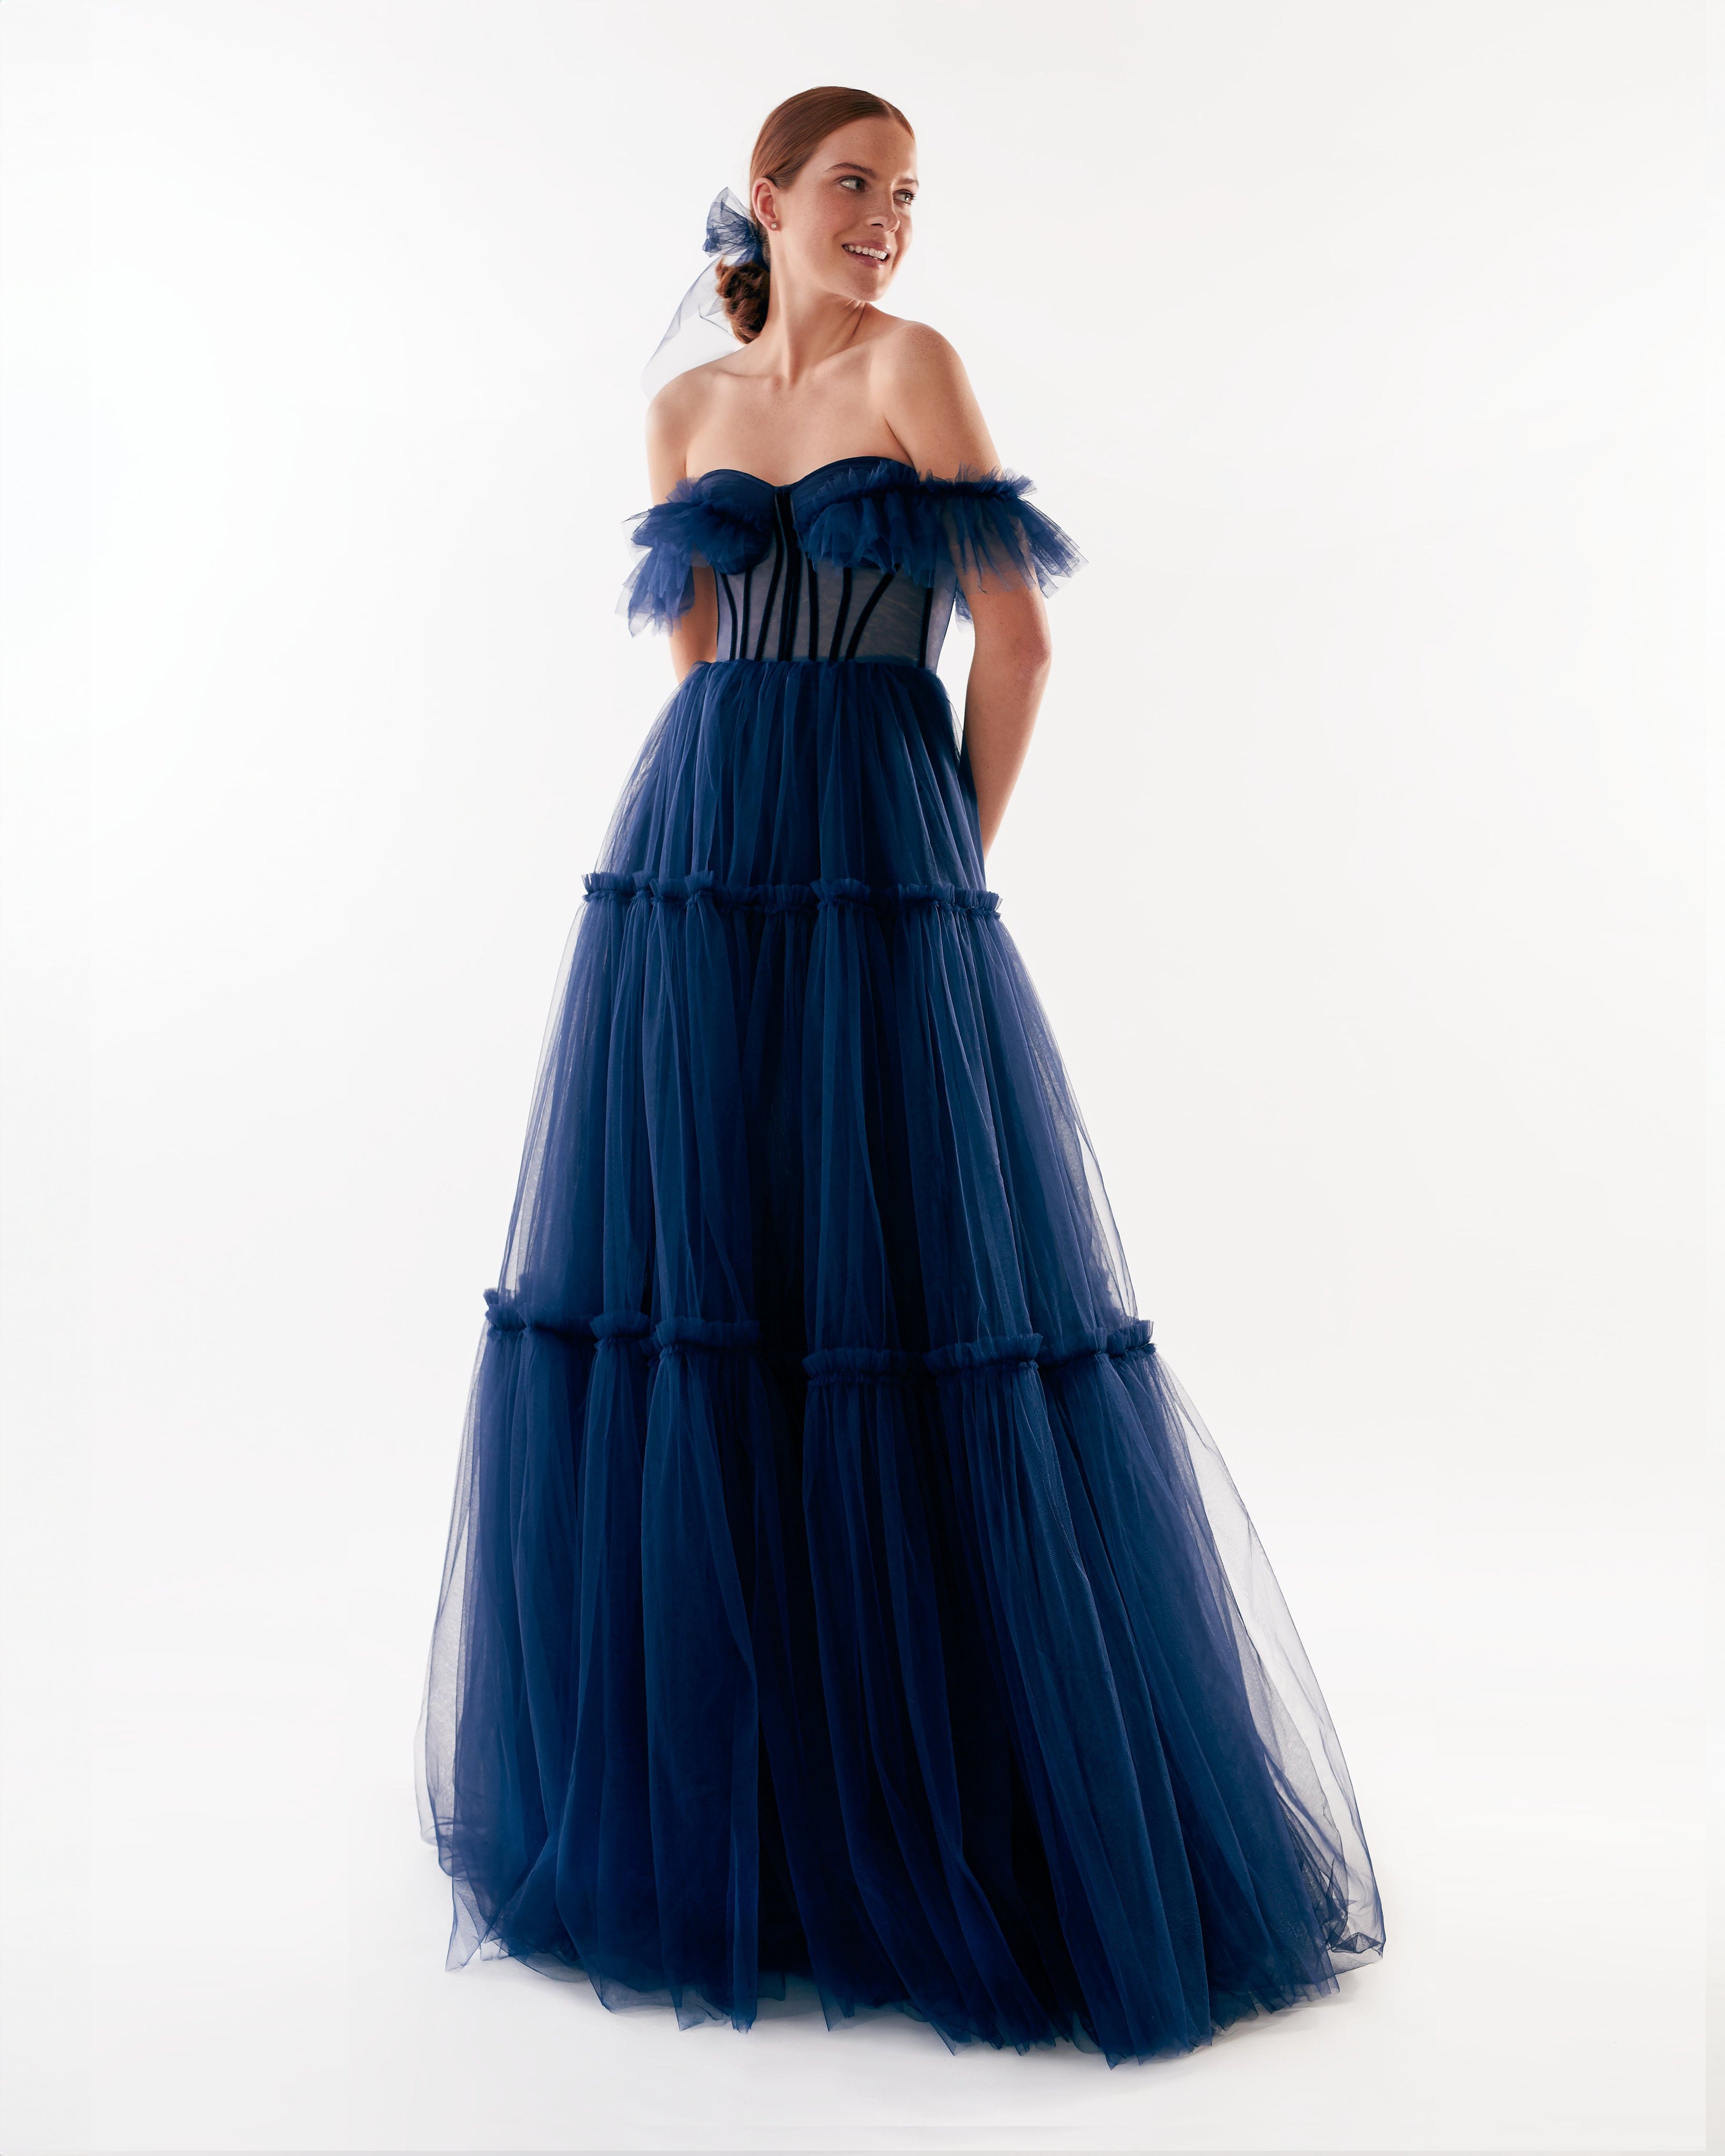 Misty Rose Sparkly off-the-shoulder tulle dress ➤➤ Milla Dresses - USA,  Worldwide delivery